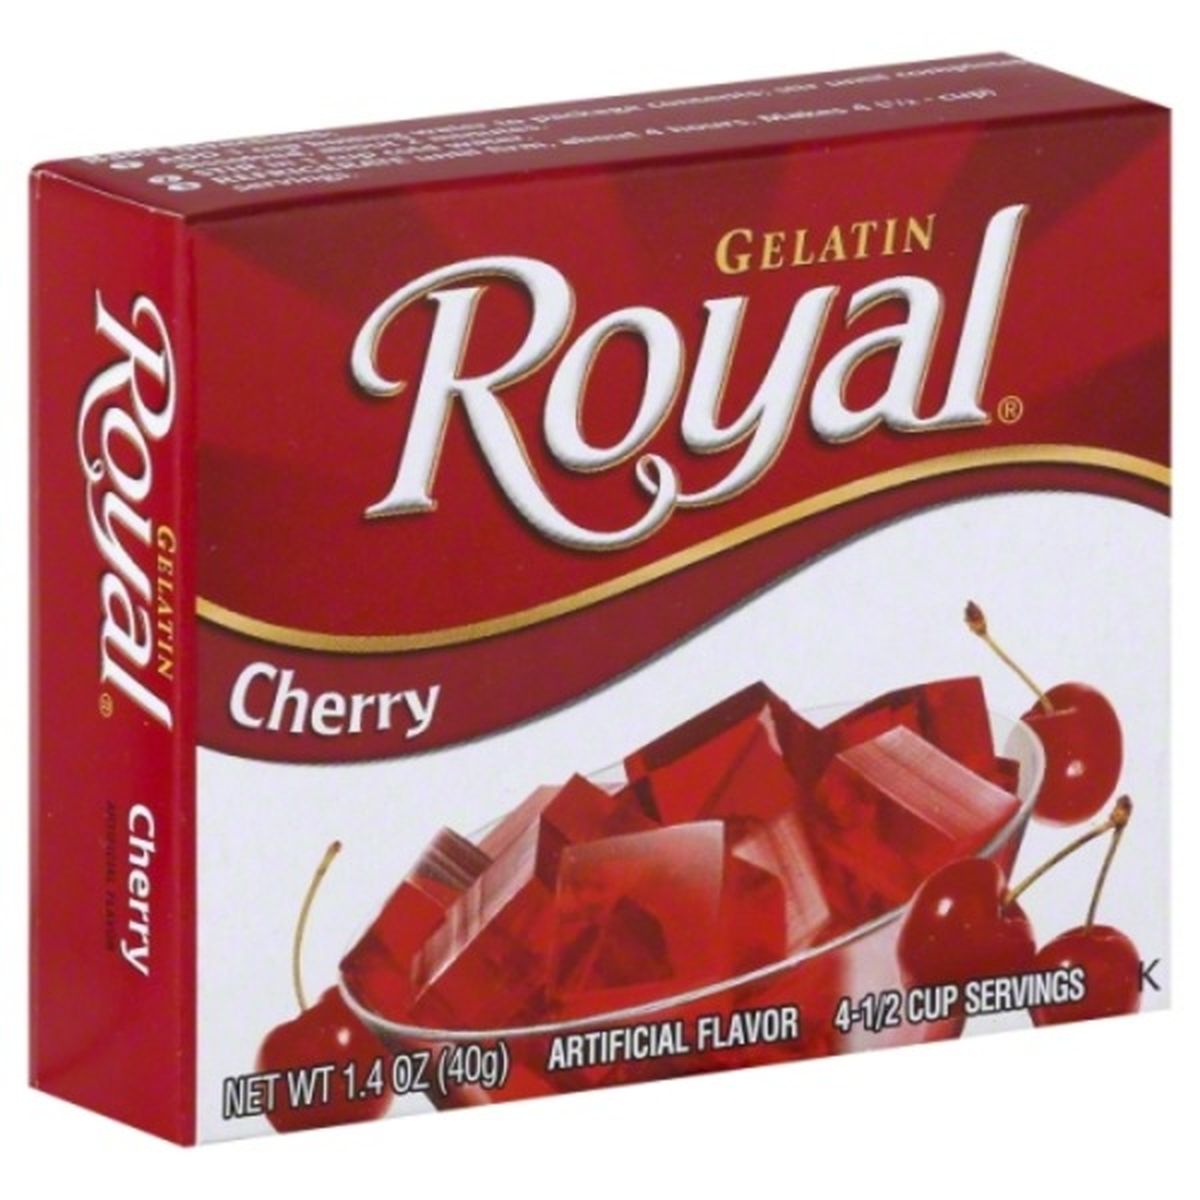 Calories in Royal Gelatin, Cherry